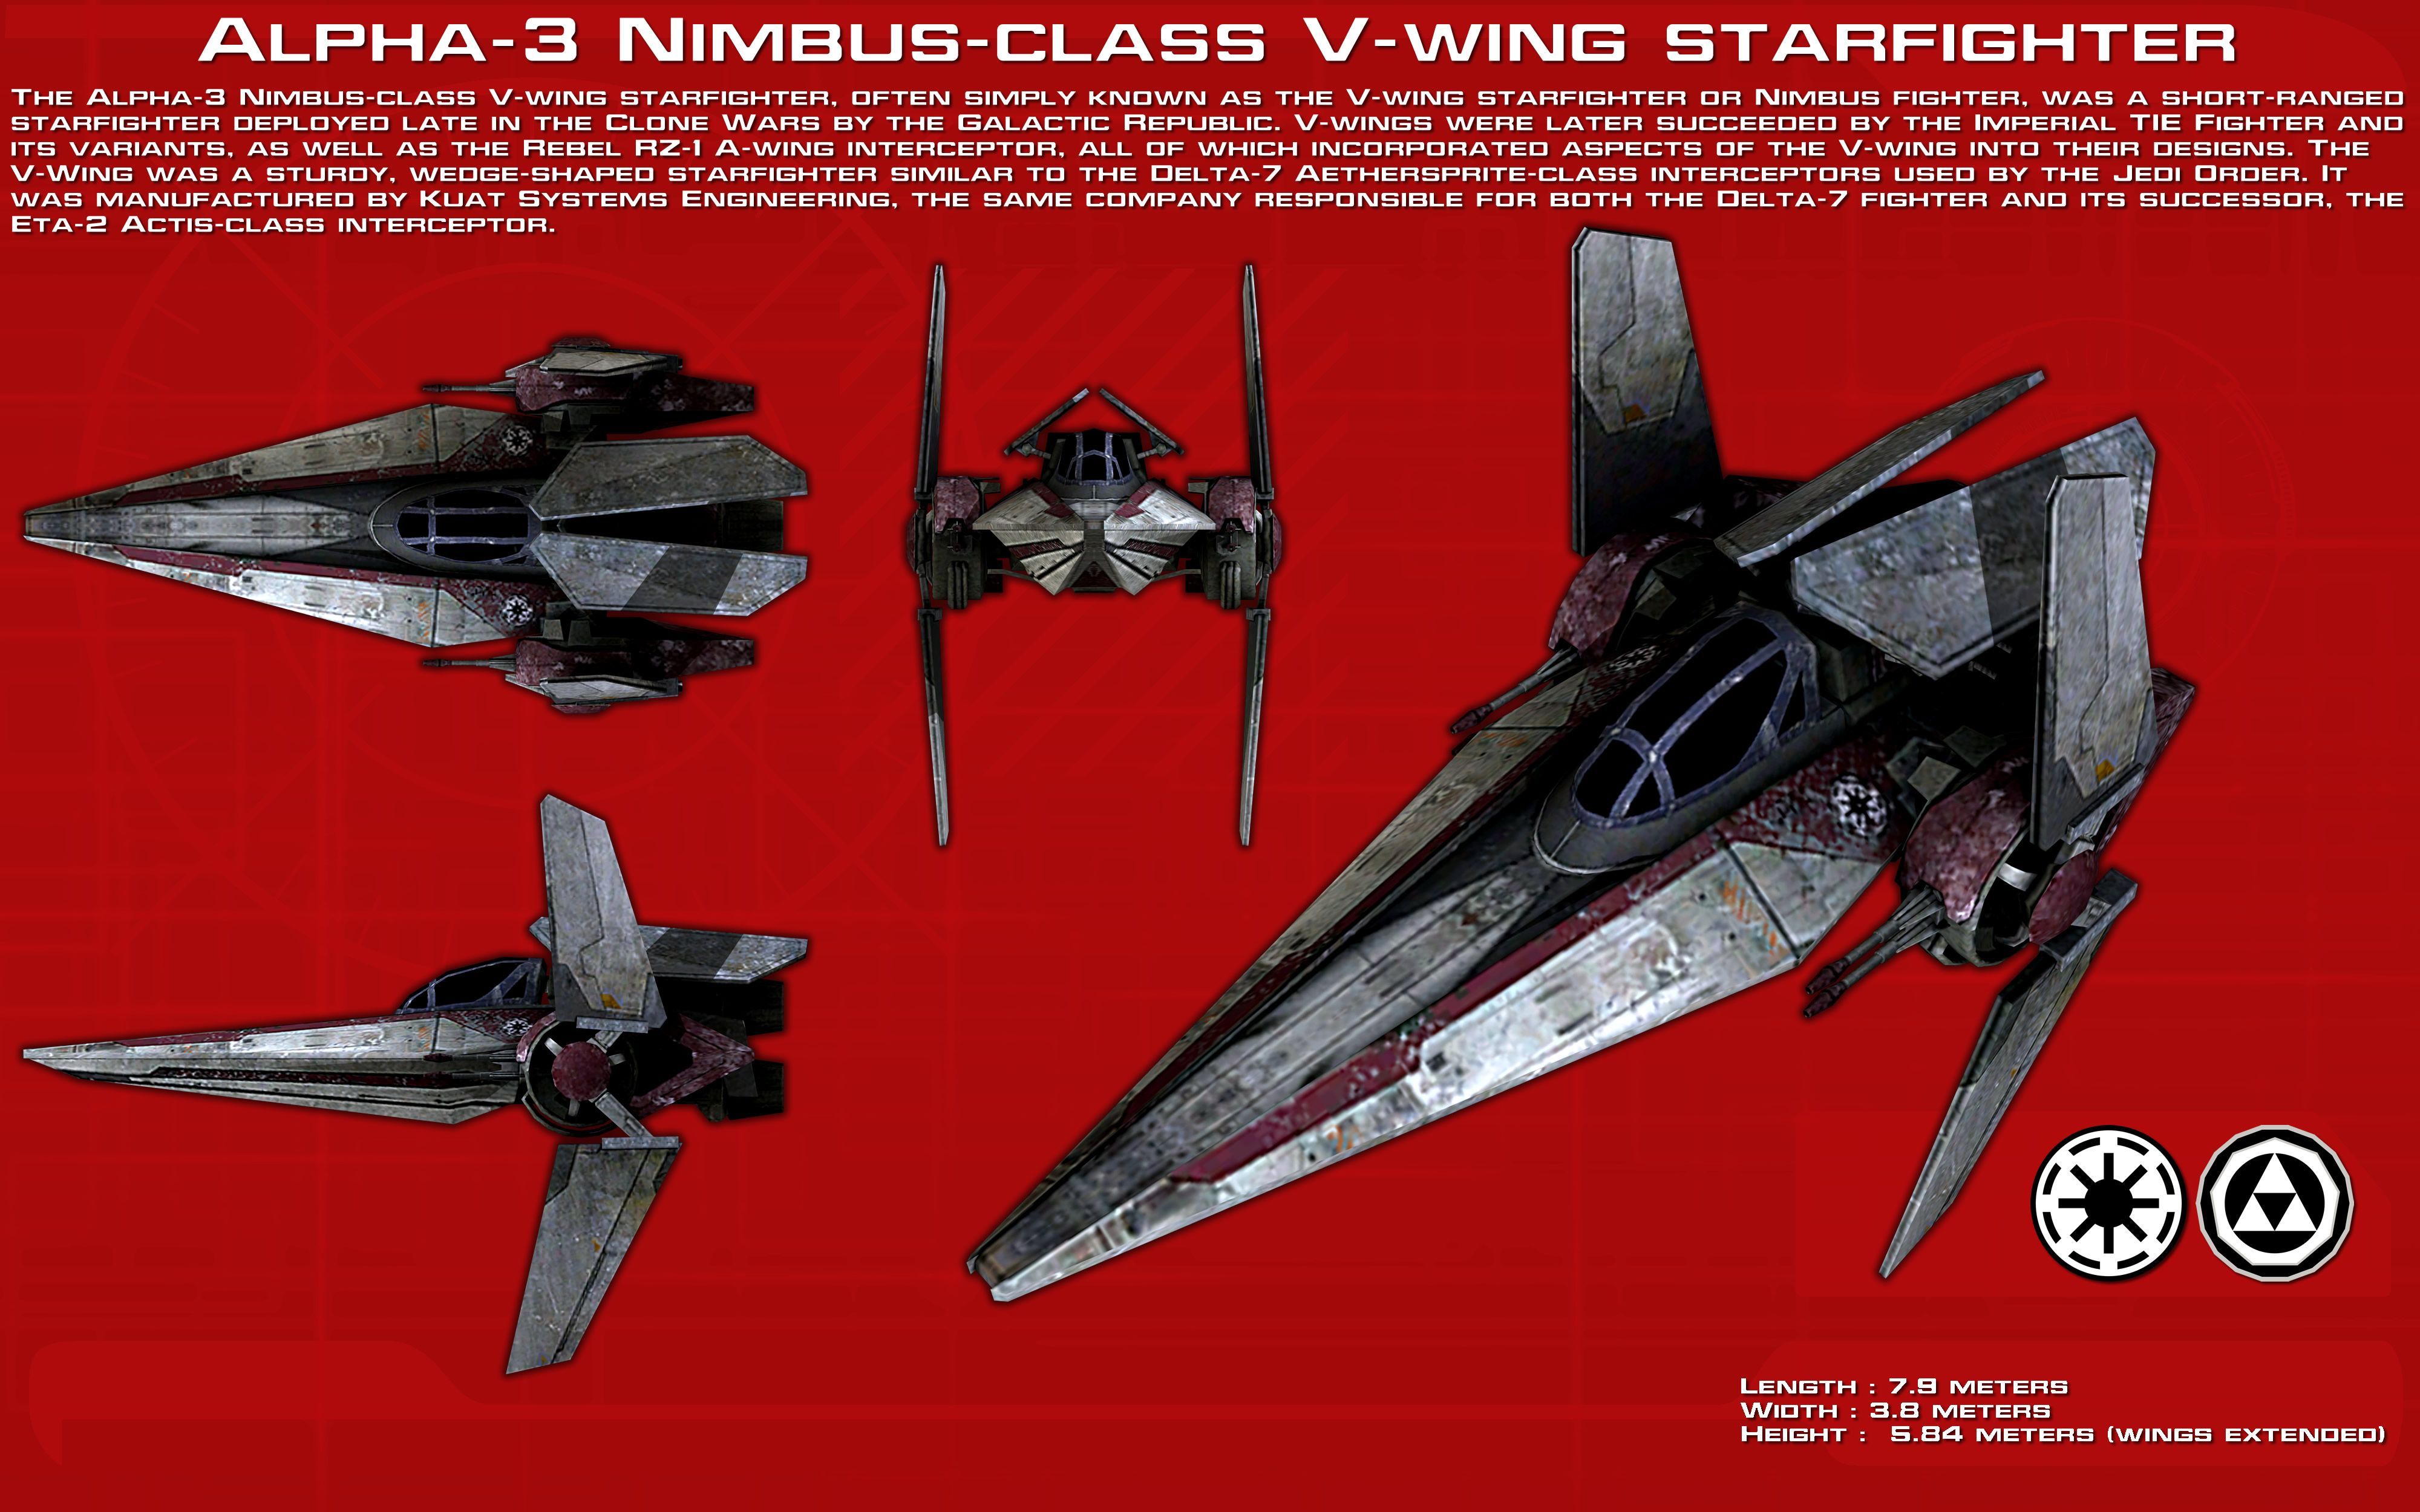 V Wing Starfighter Ortho [1][New]. Star Wars Vehicles, Star Wars Ships Design, Star Wars Ships